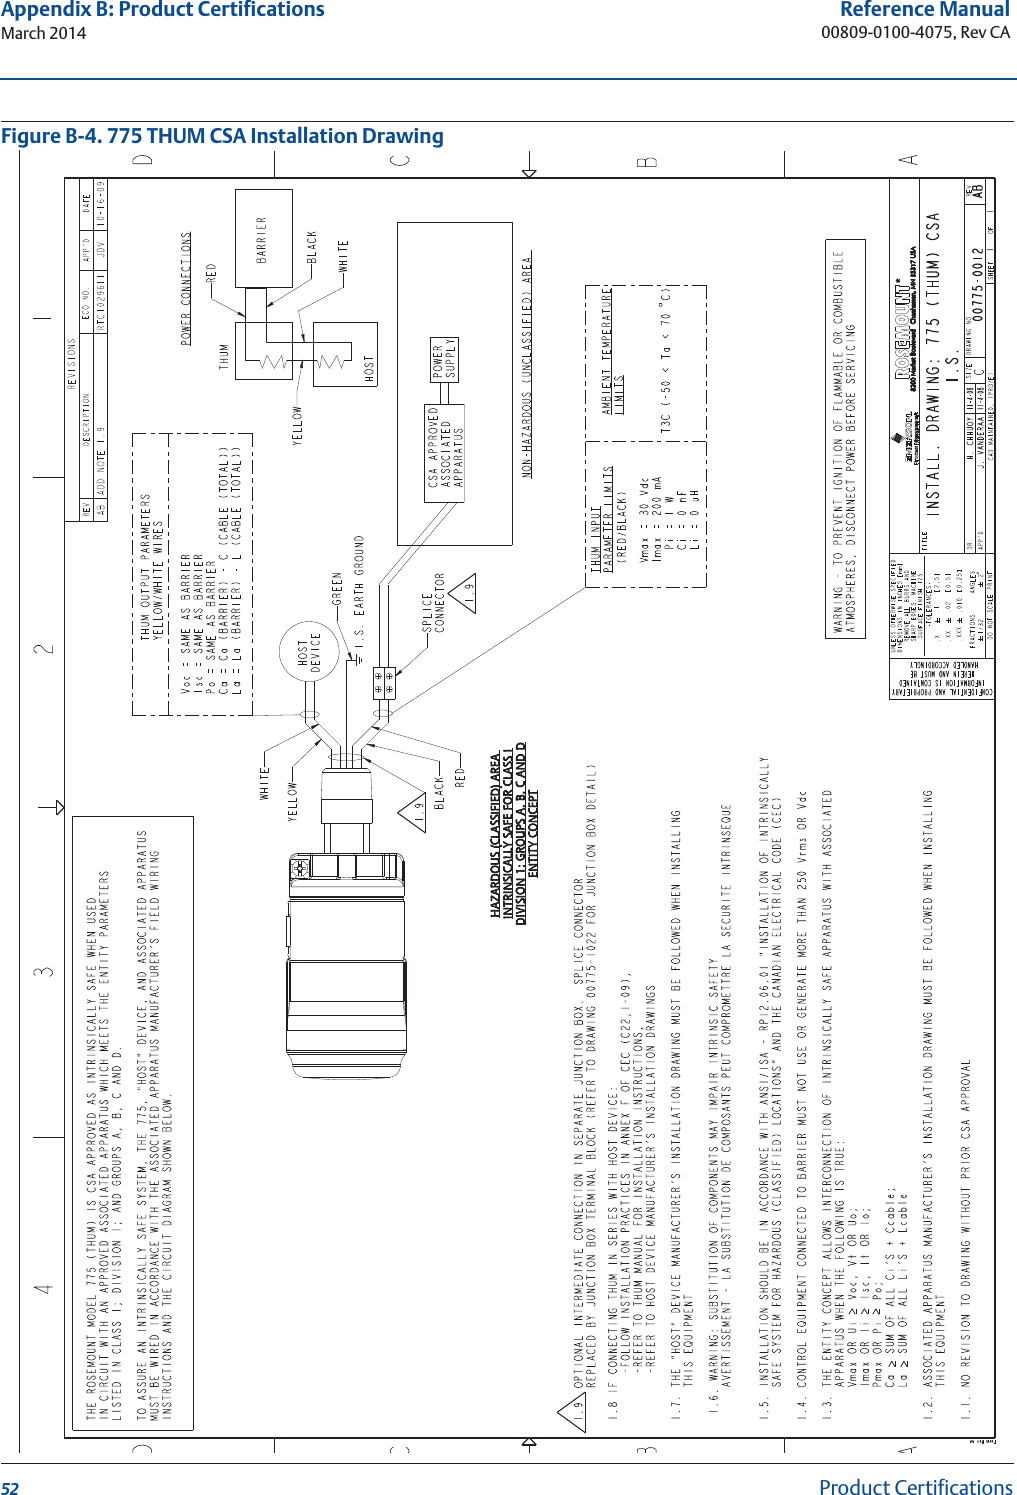 52Reference Manual00809-0100-4075, Rev CAAppendix B: Product CertificationsMarch 2014Product CertificationsFigure B-4. 775 THUM CSA Installation Drawing